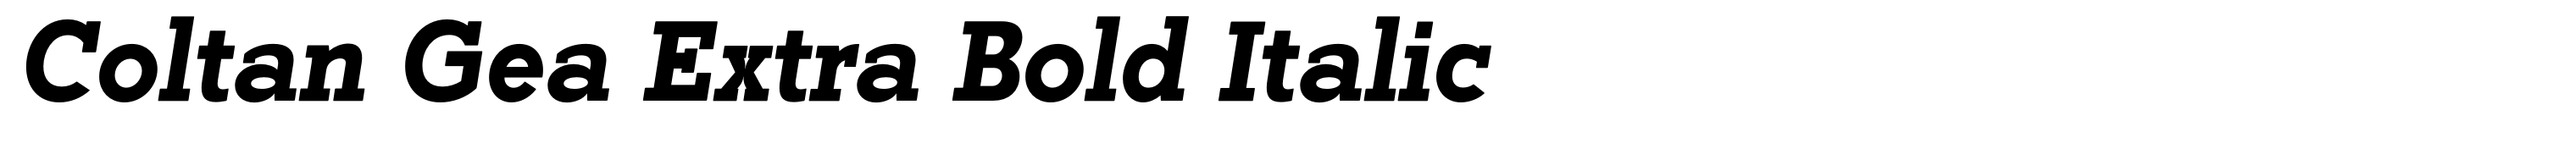 Coltan Gea Extra Bold Italic